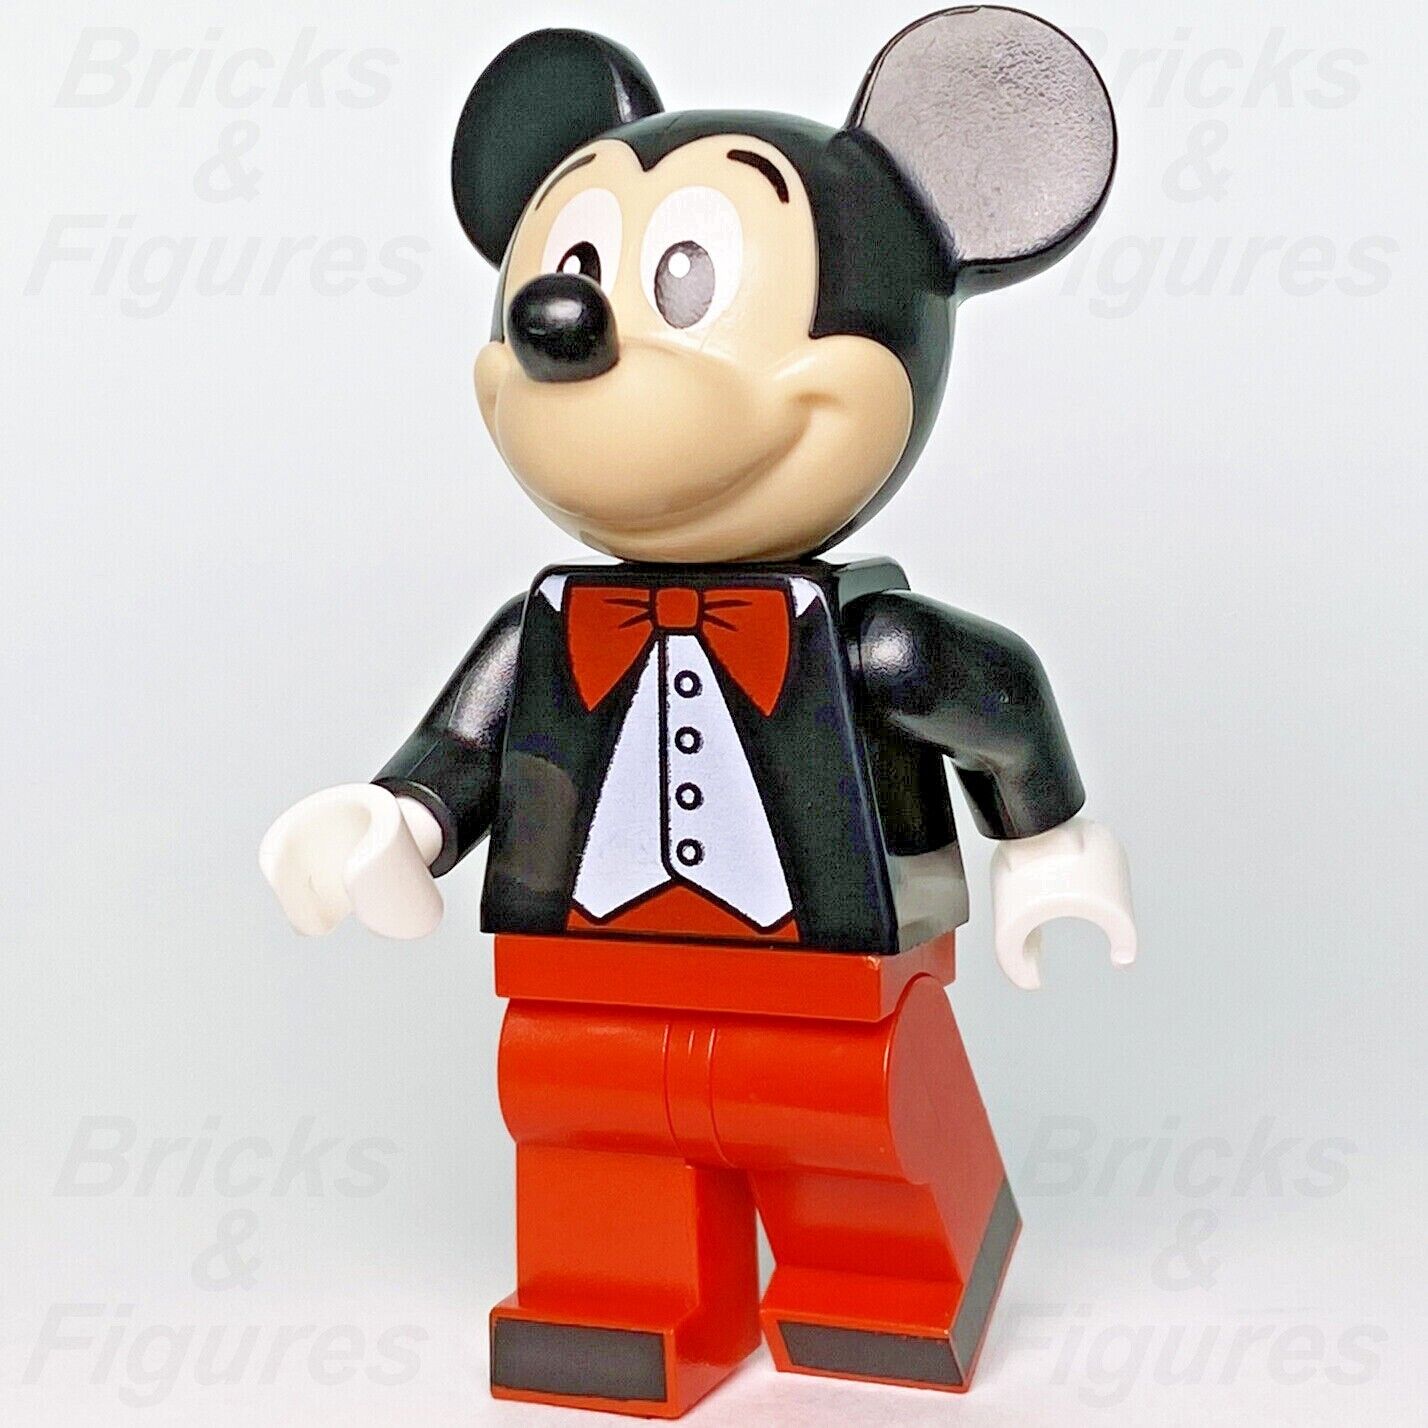 LEGO Disney Mickey Mouse Minifigure with Tuxedo Jacket Red Bow Tie 40478 dis057 - Bricks & Figures